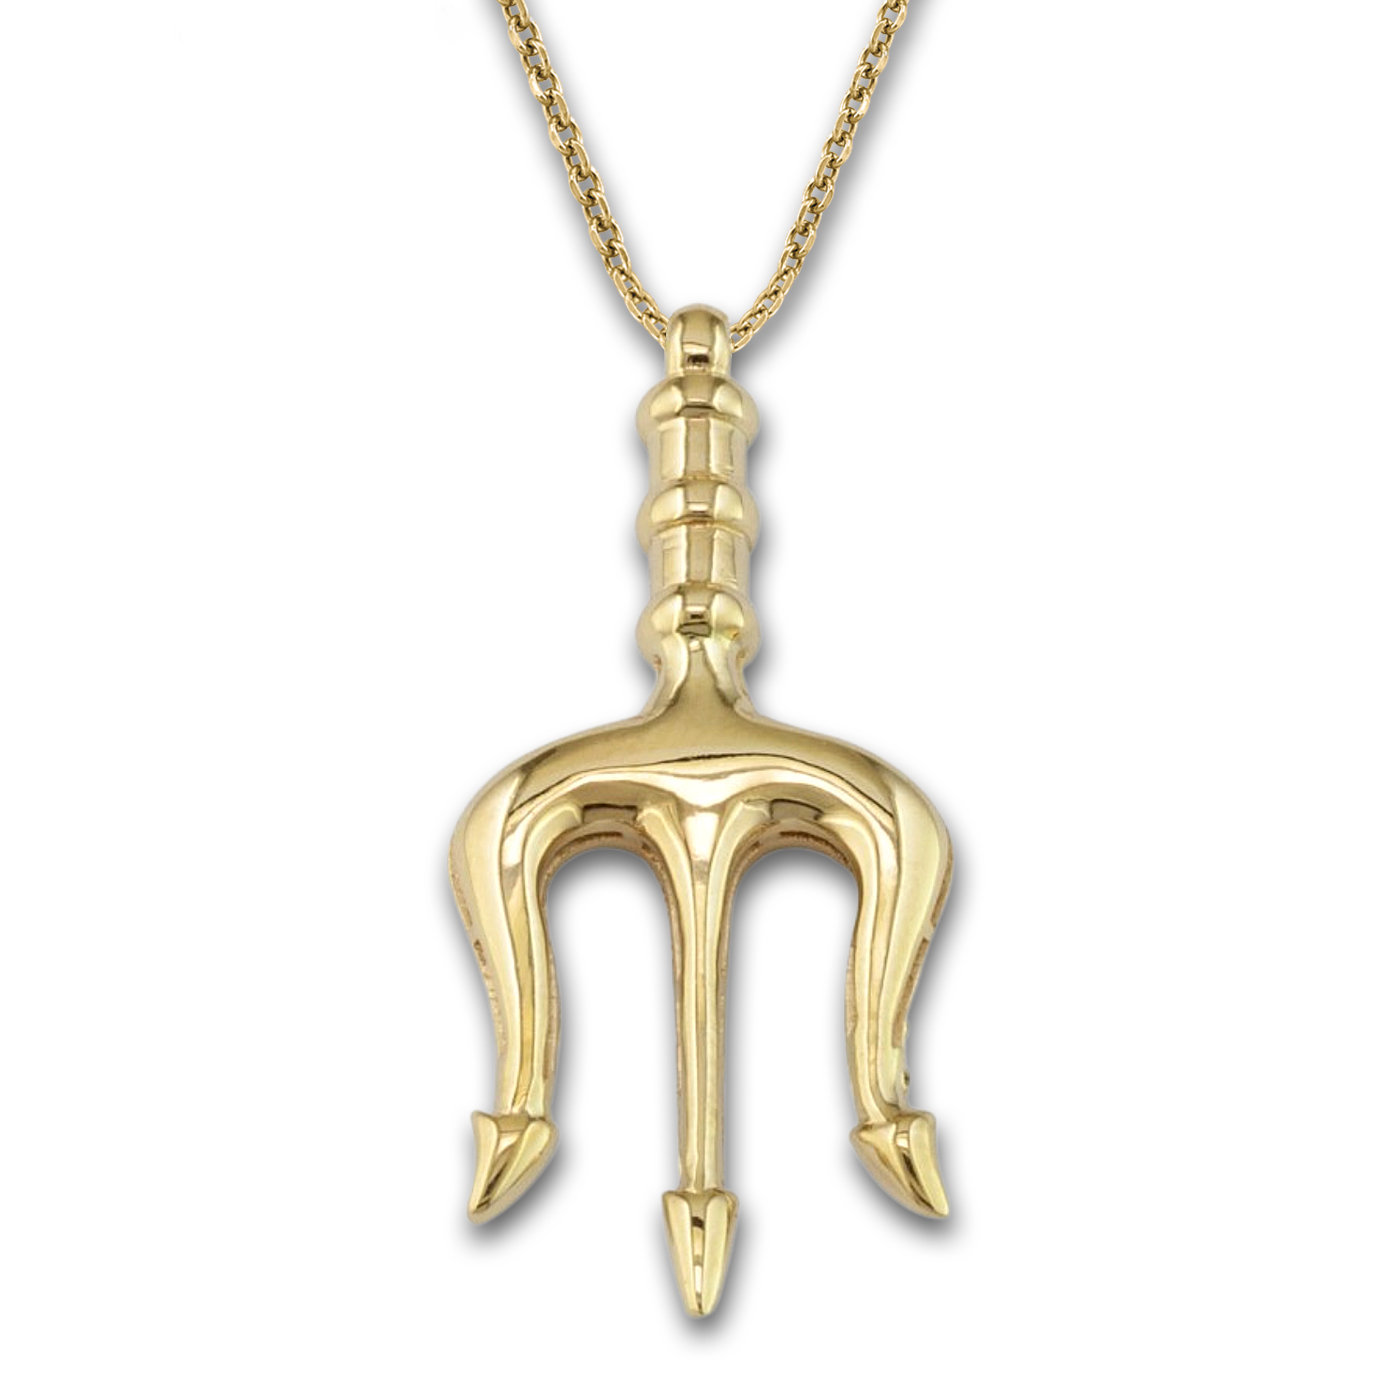 Poseidon's Trident gold Pendant